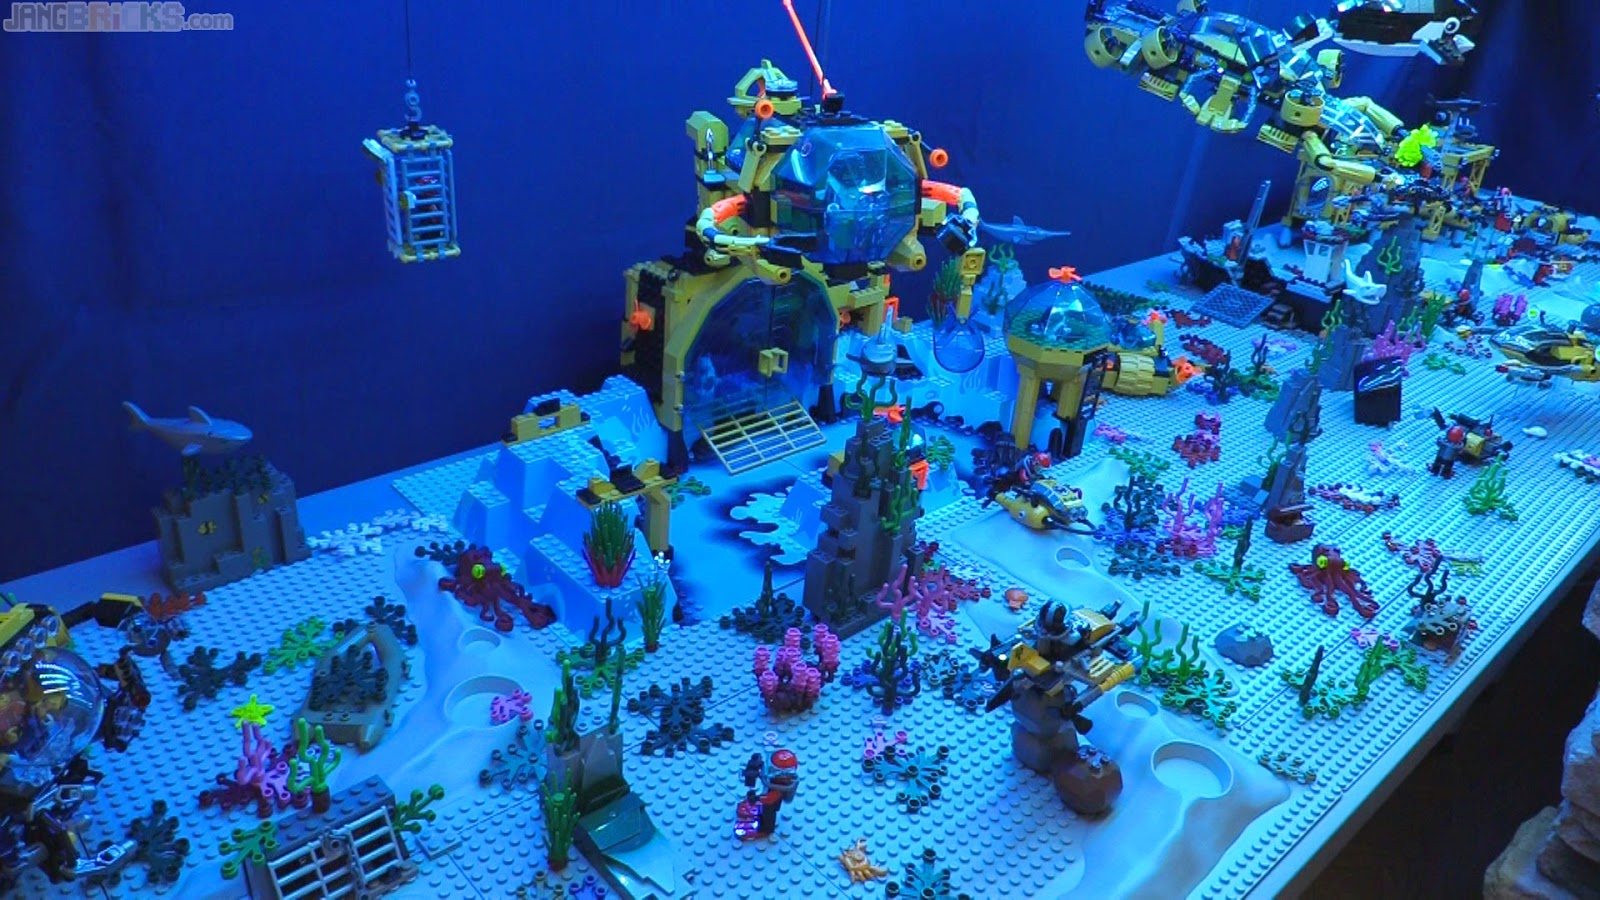 Expanded LEGO deep sea exploration display!